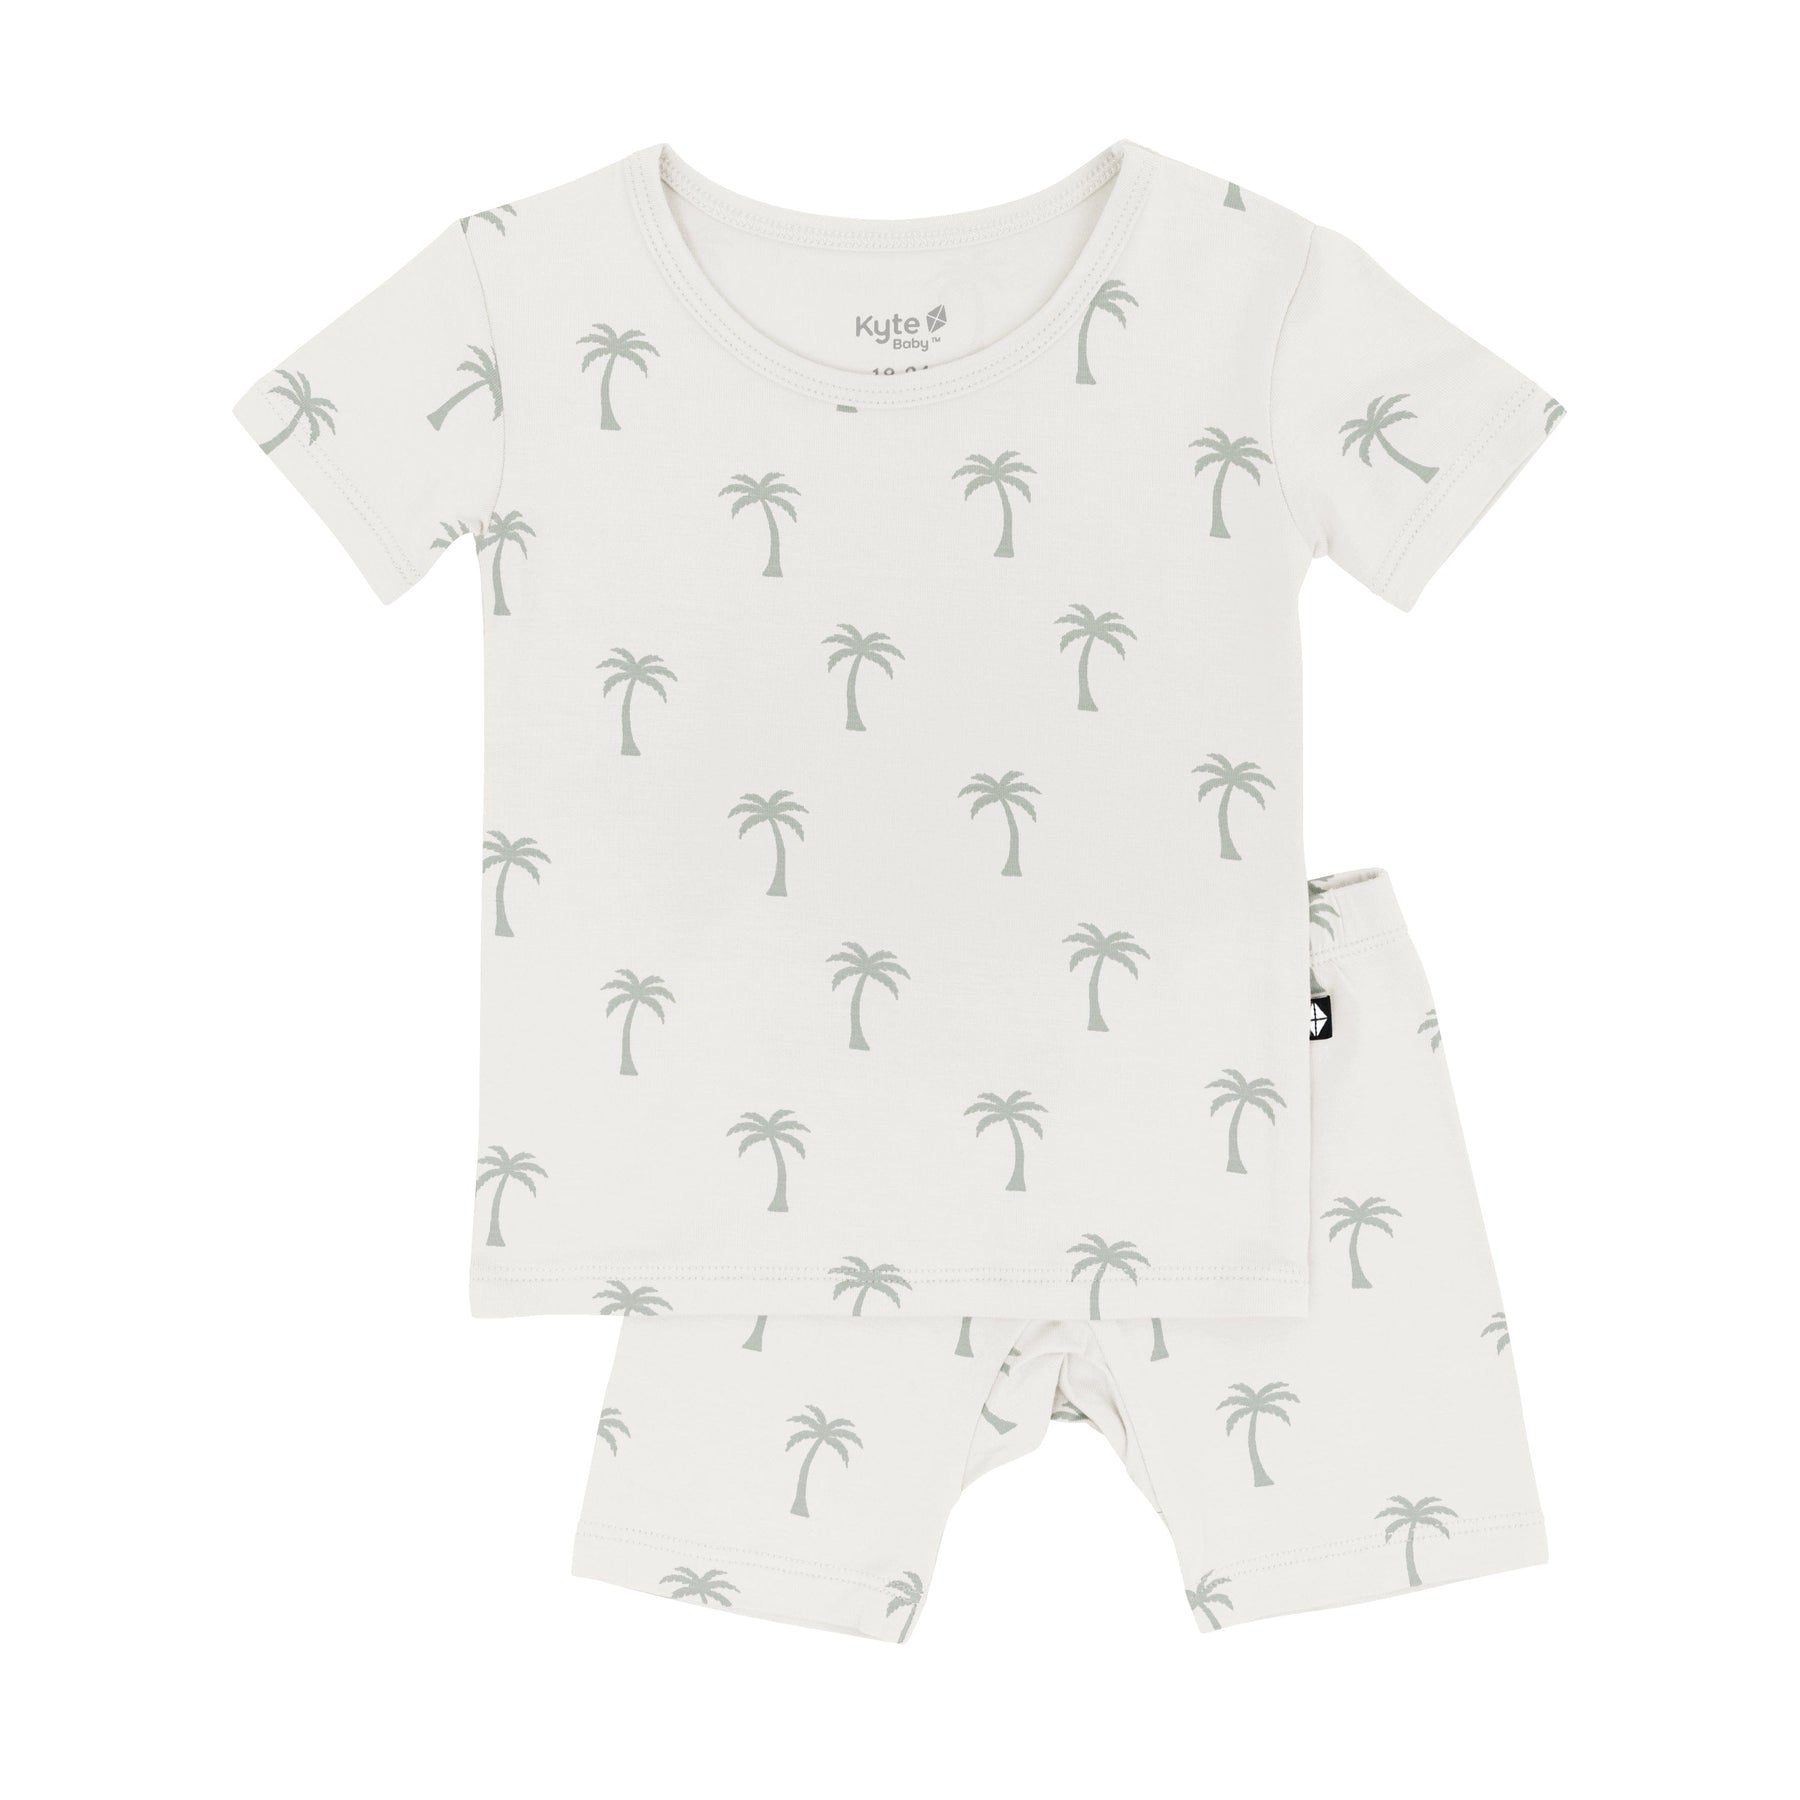 Kyte Baby Short Sleeve Toddler Pajama Set Short Sleeve Pajamas in Palm Tree